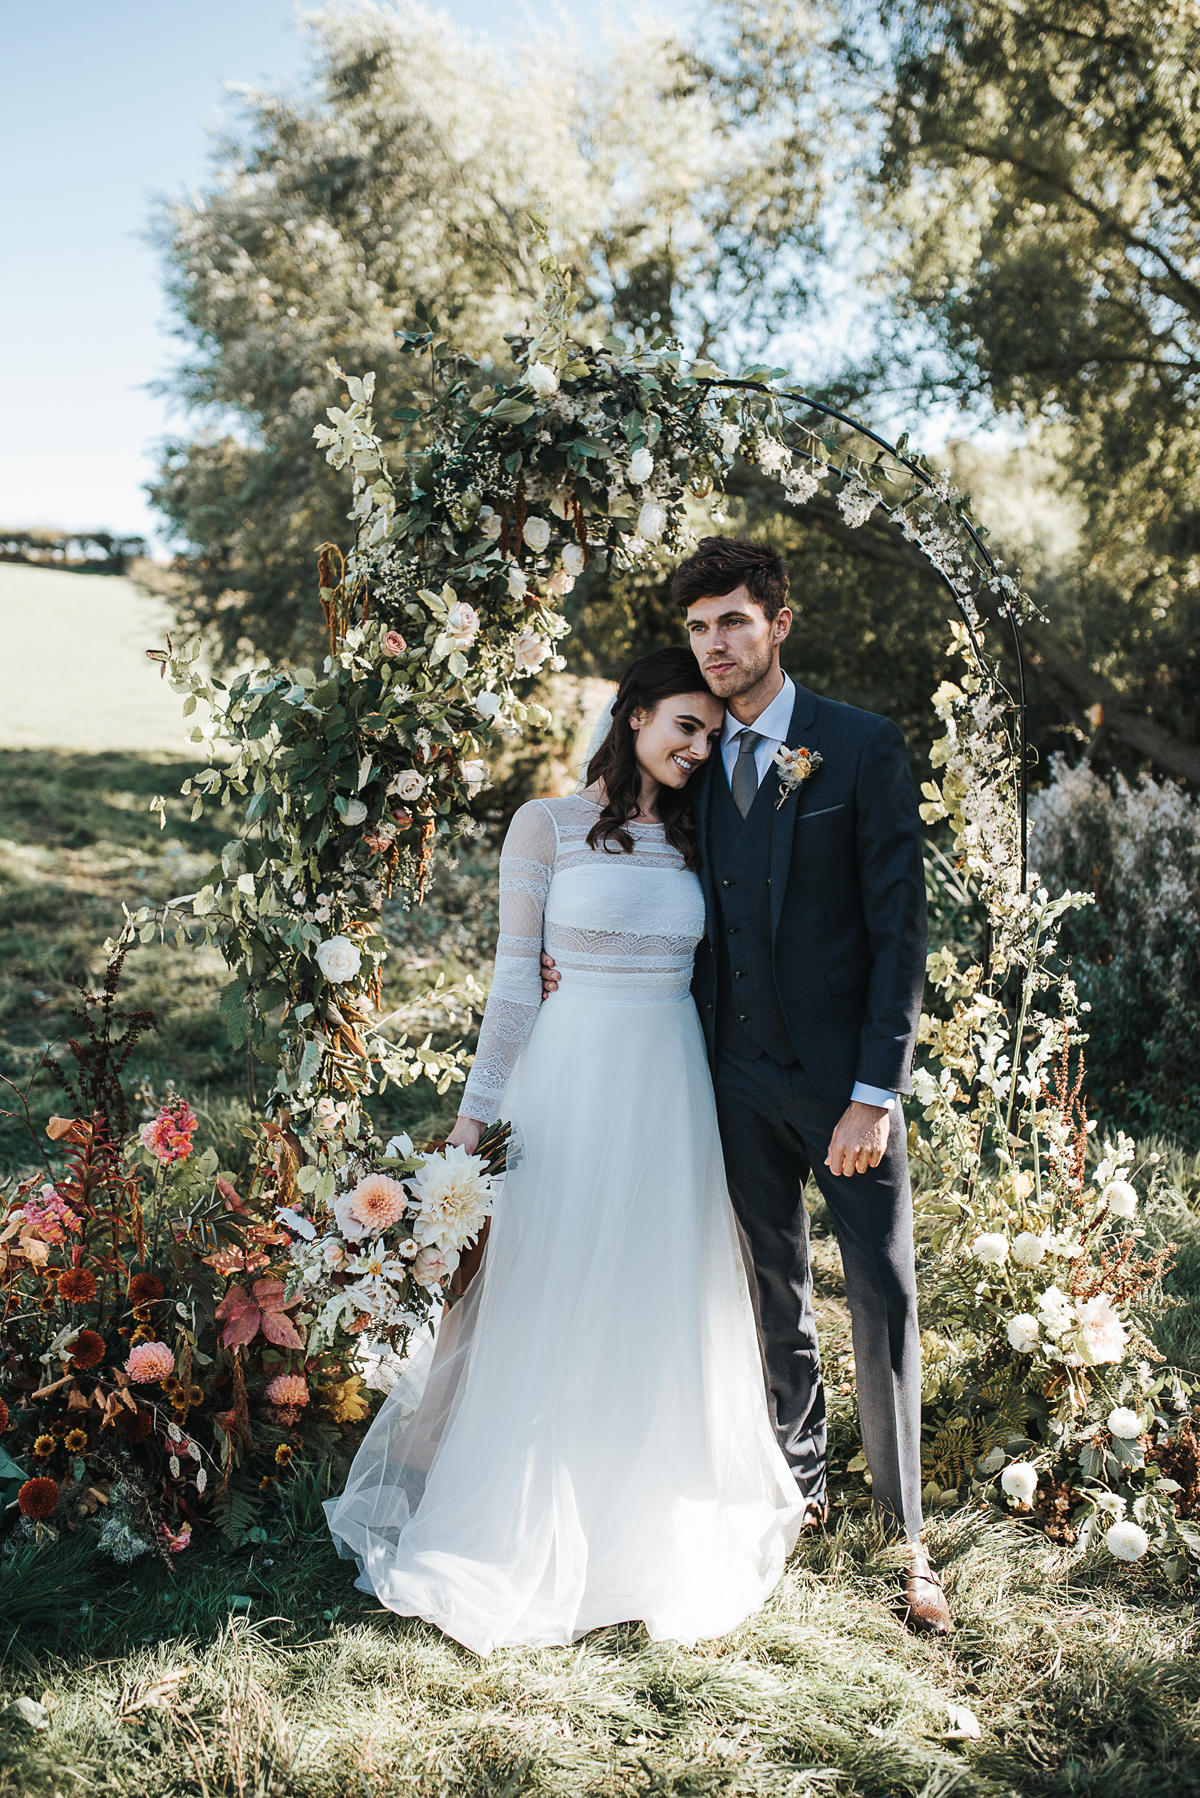 16 Charlie Brear bridal separates and modern elegant Autumn wedding glamping inspiration